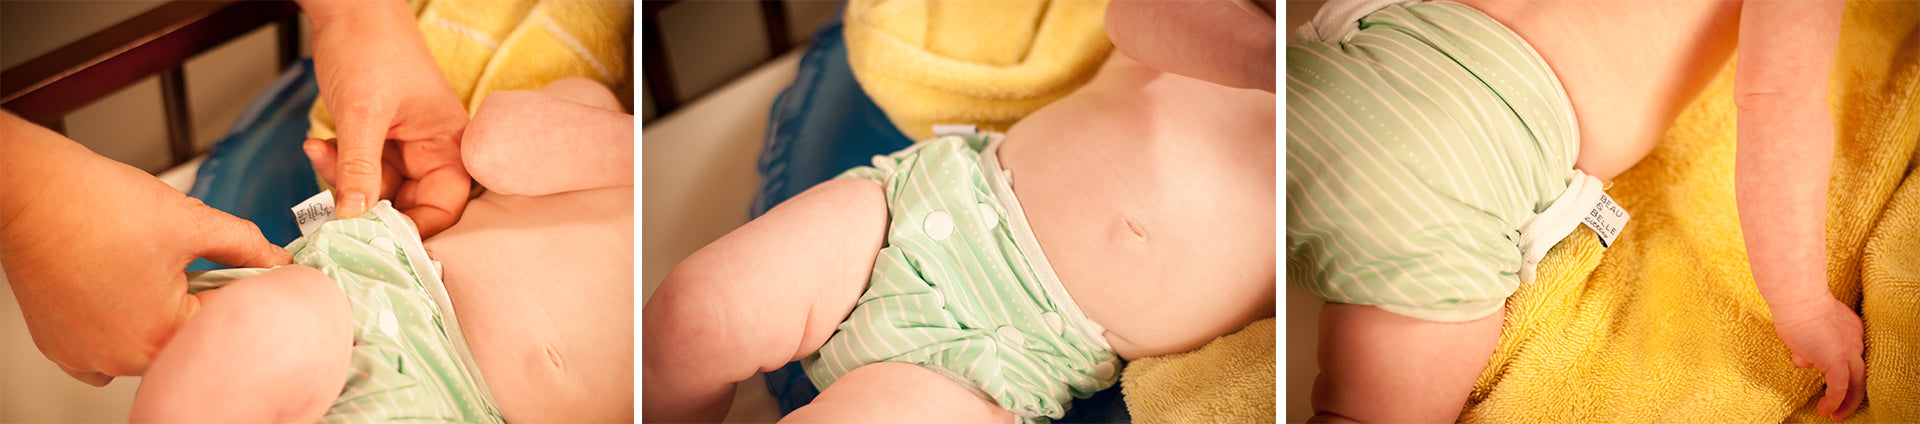 How to Adjust a Nagueret Swim Diaper for Newborns